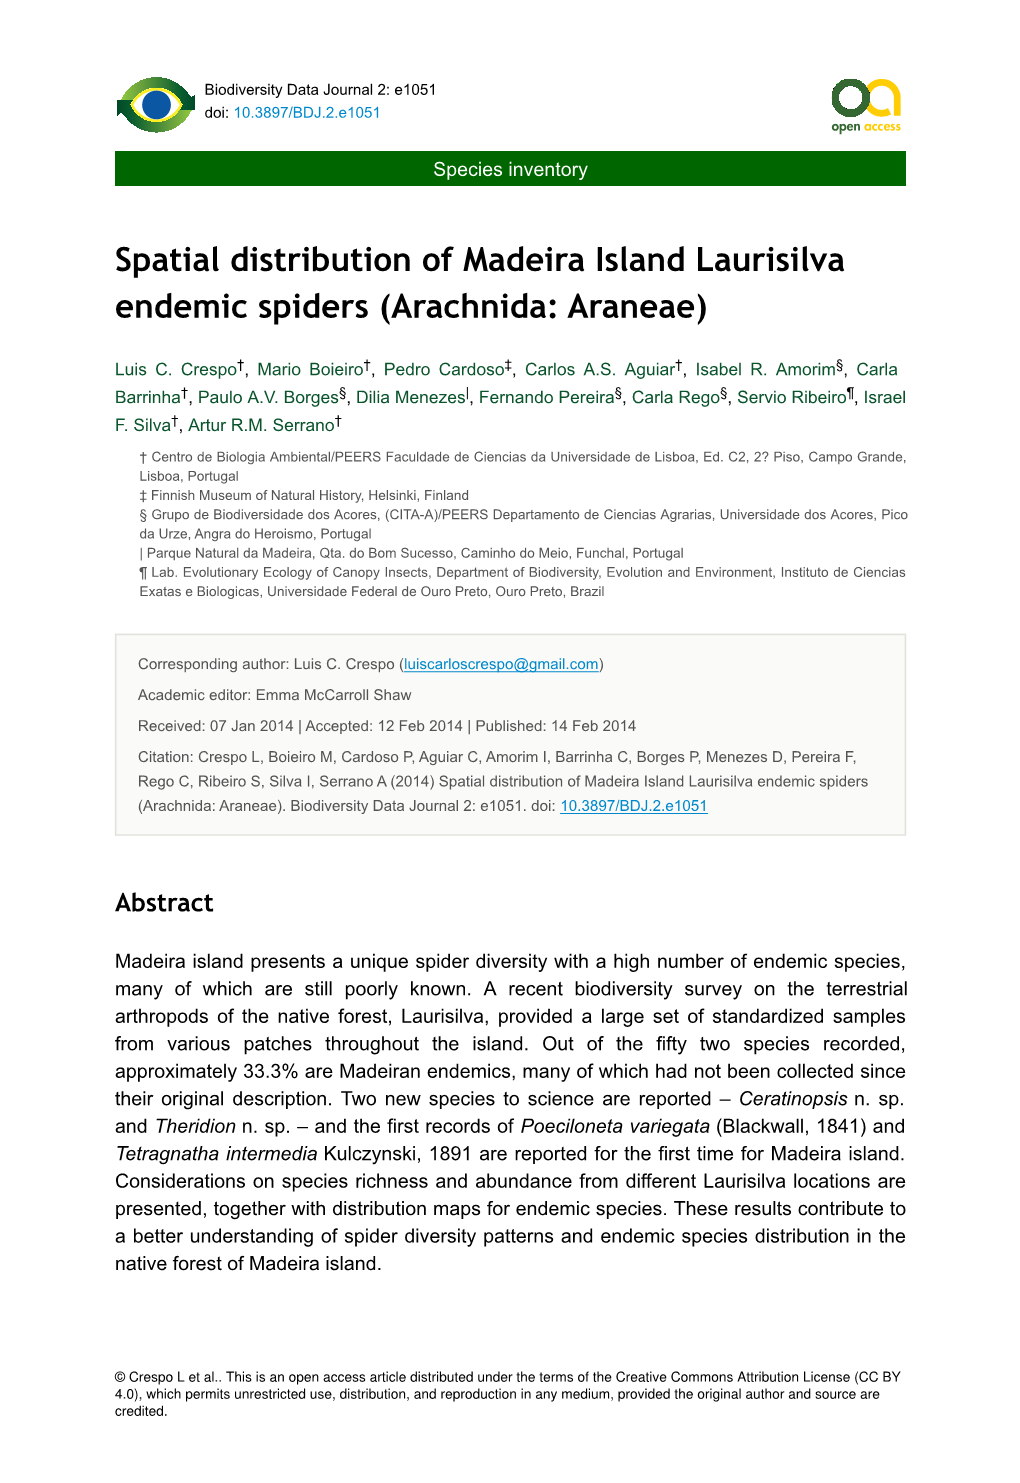 Spatial Distribution of Madeira Island Laurisilva Endemic Spiders (Arachnida: Araneae)